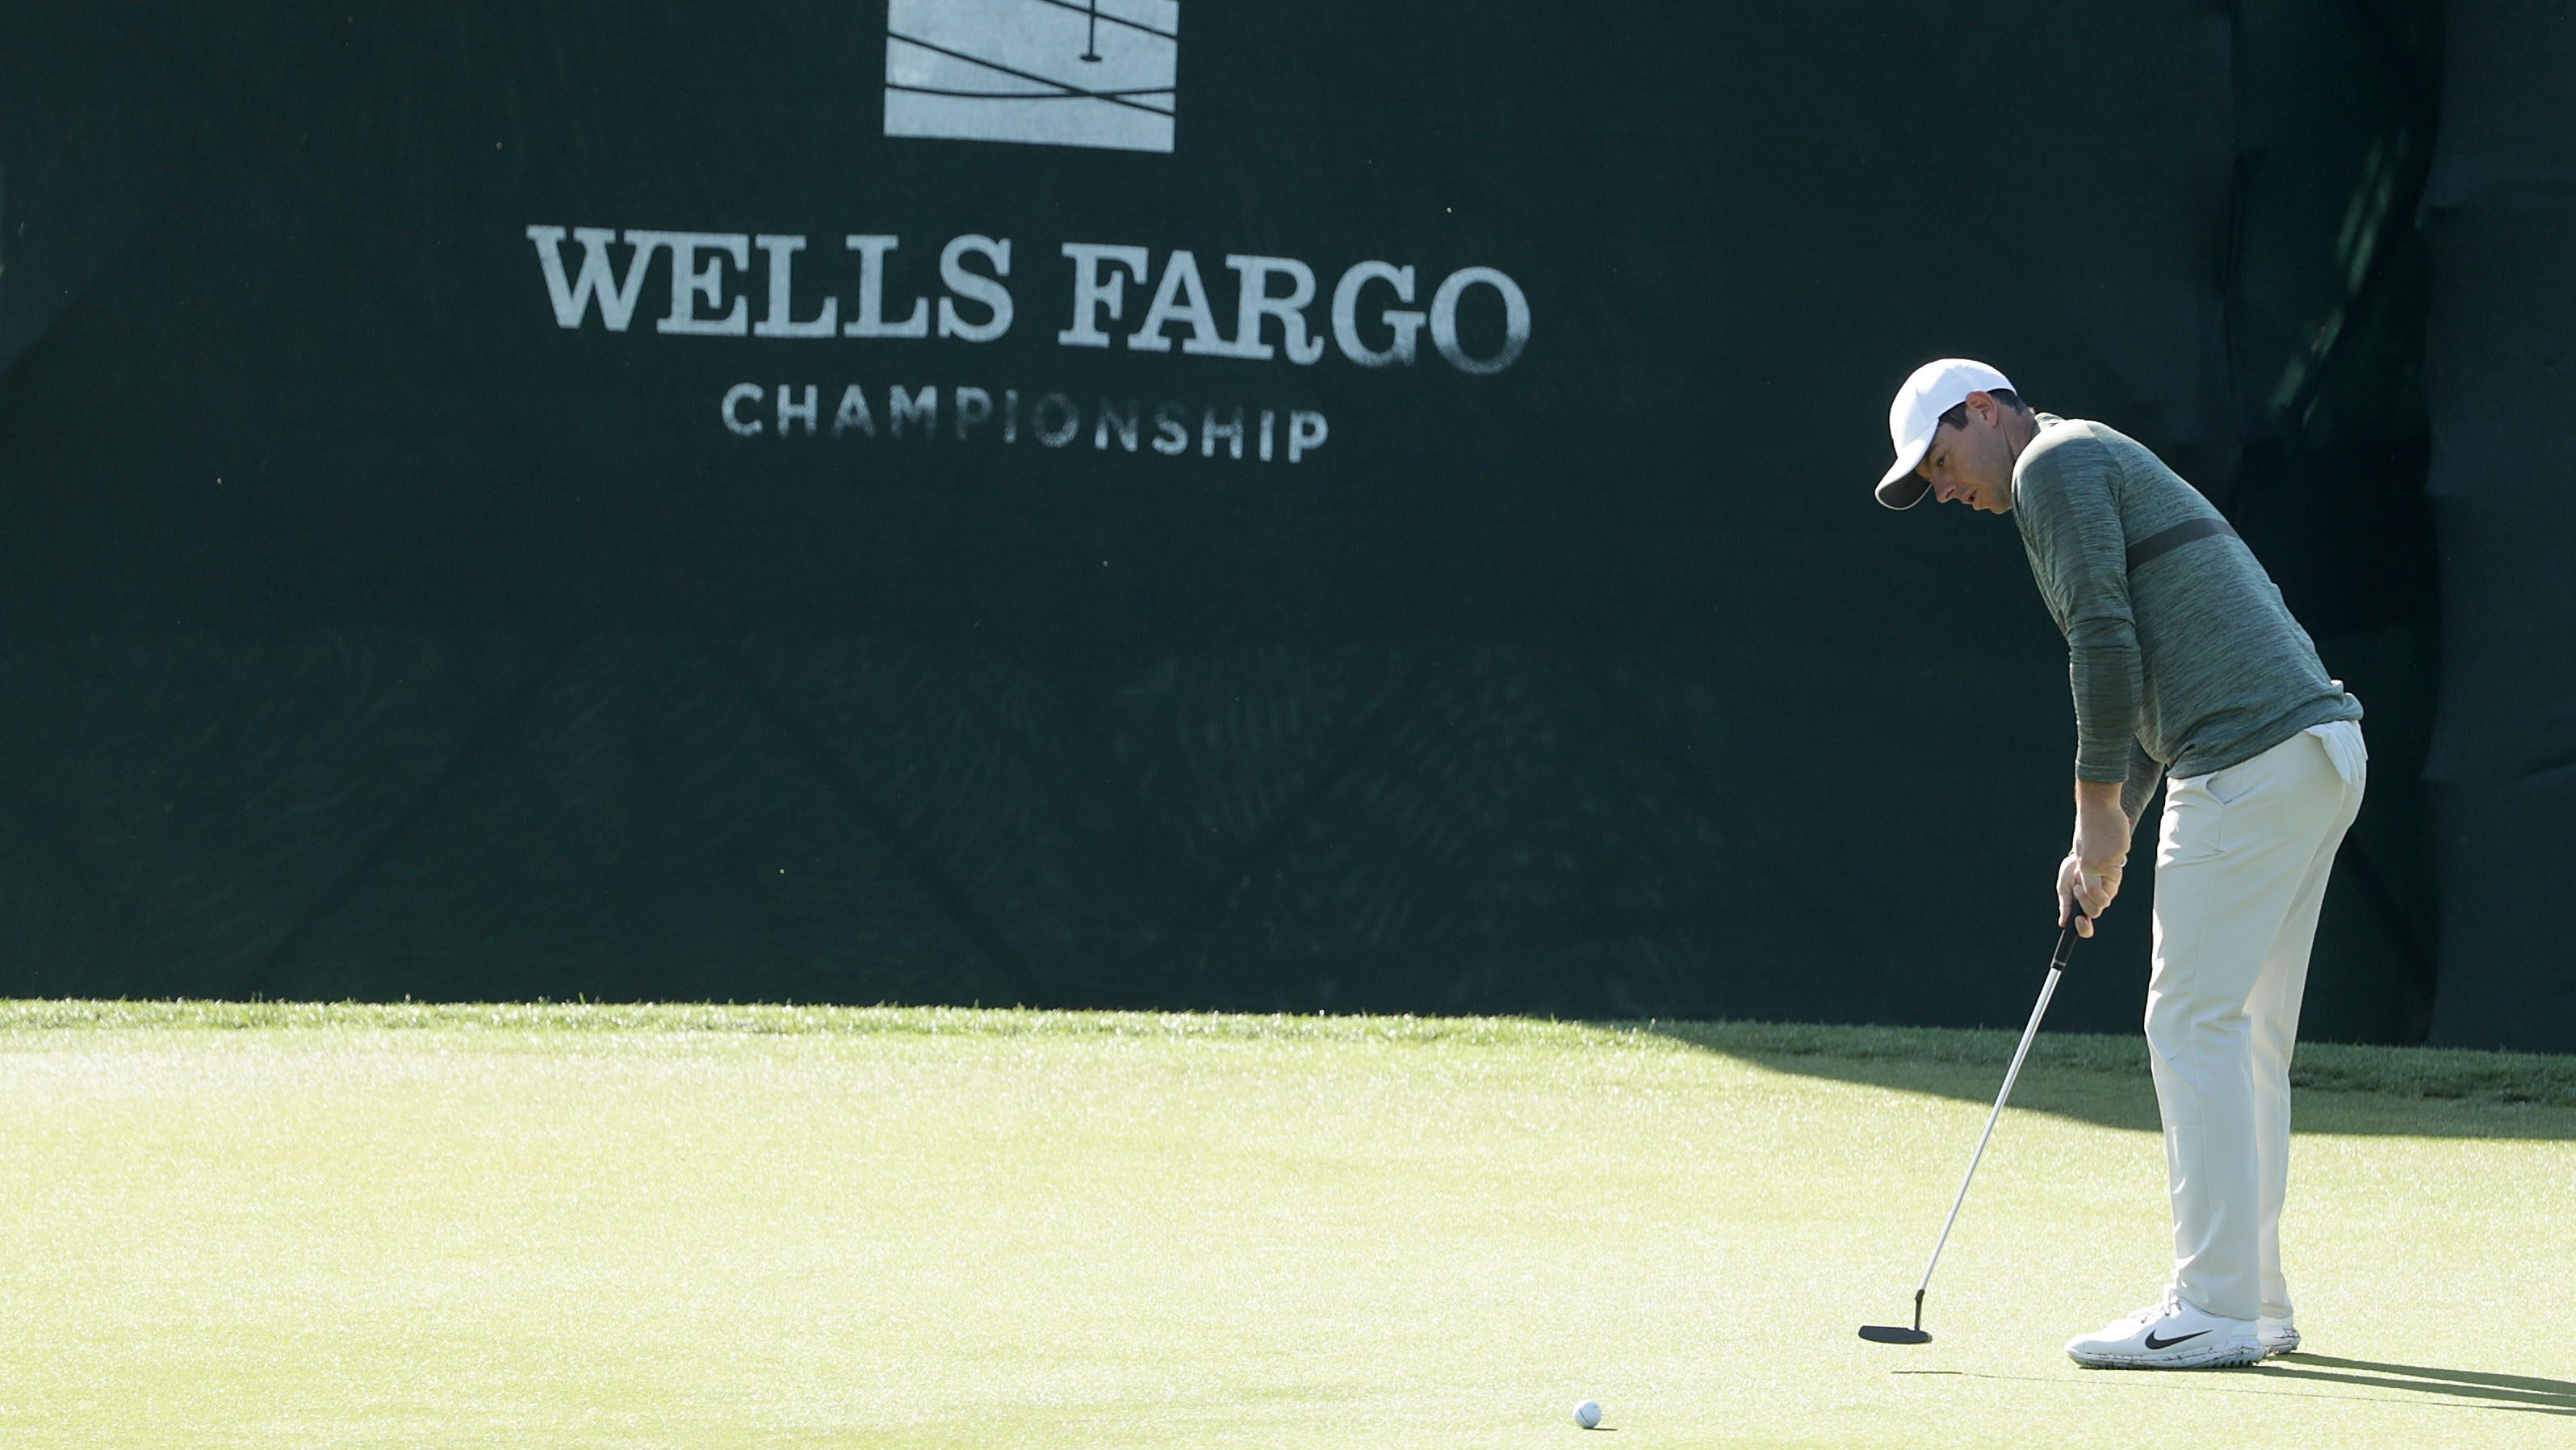 How to Watch Wells Fargo Championship Live Online